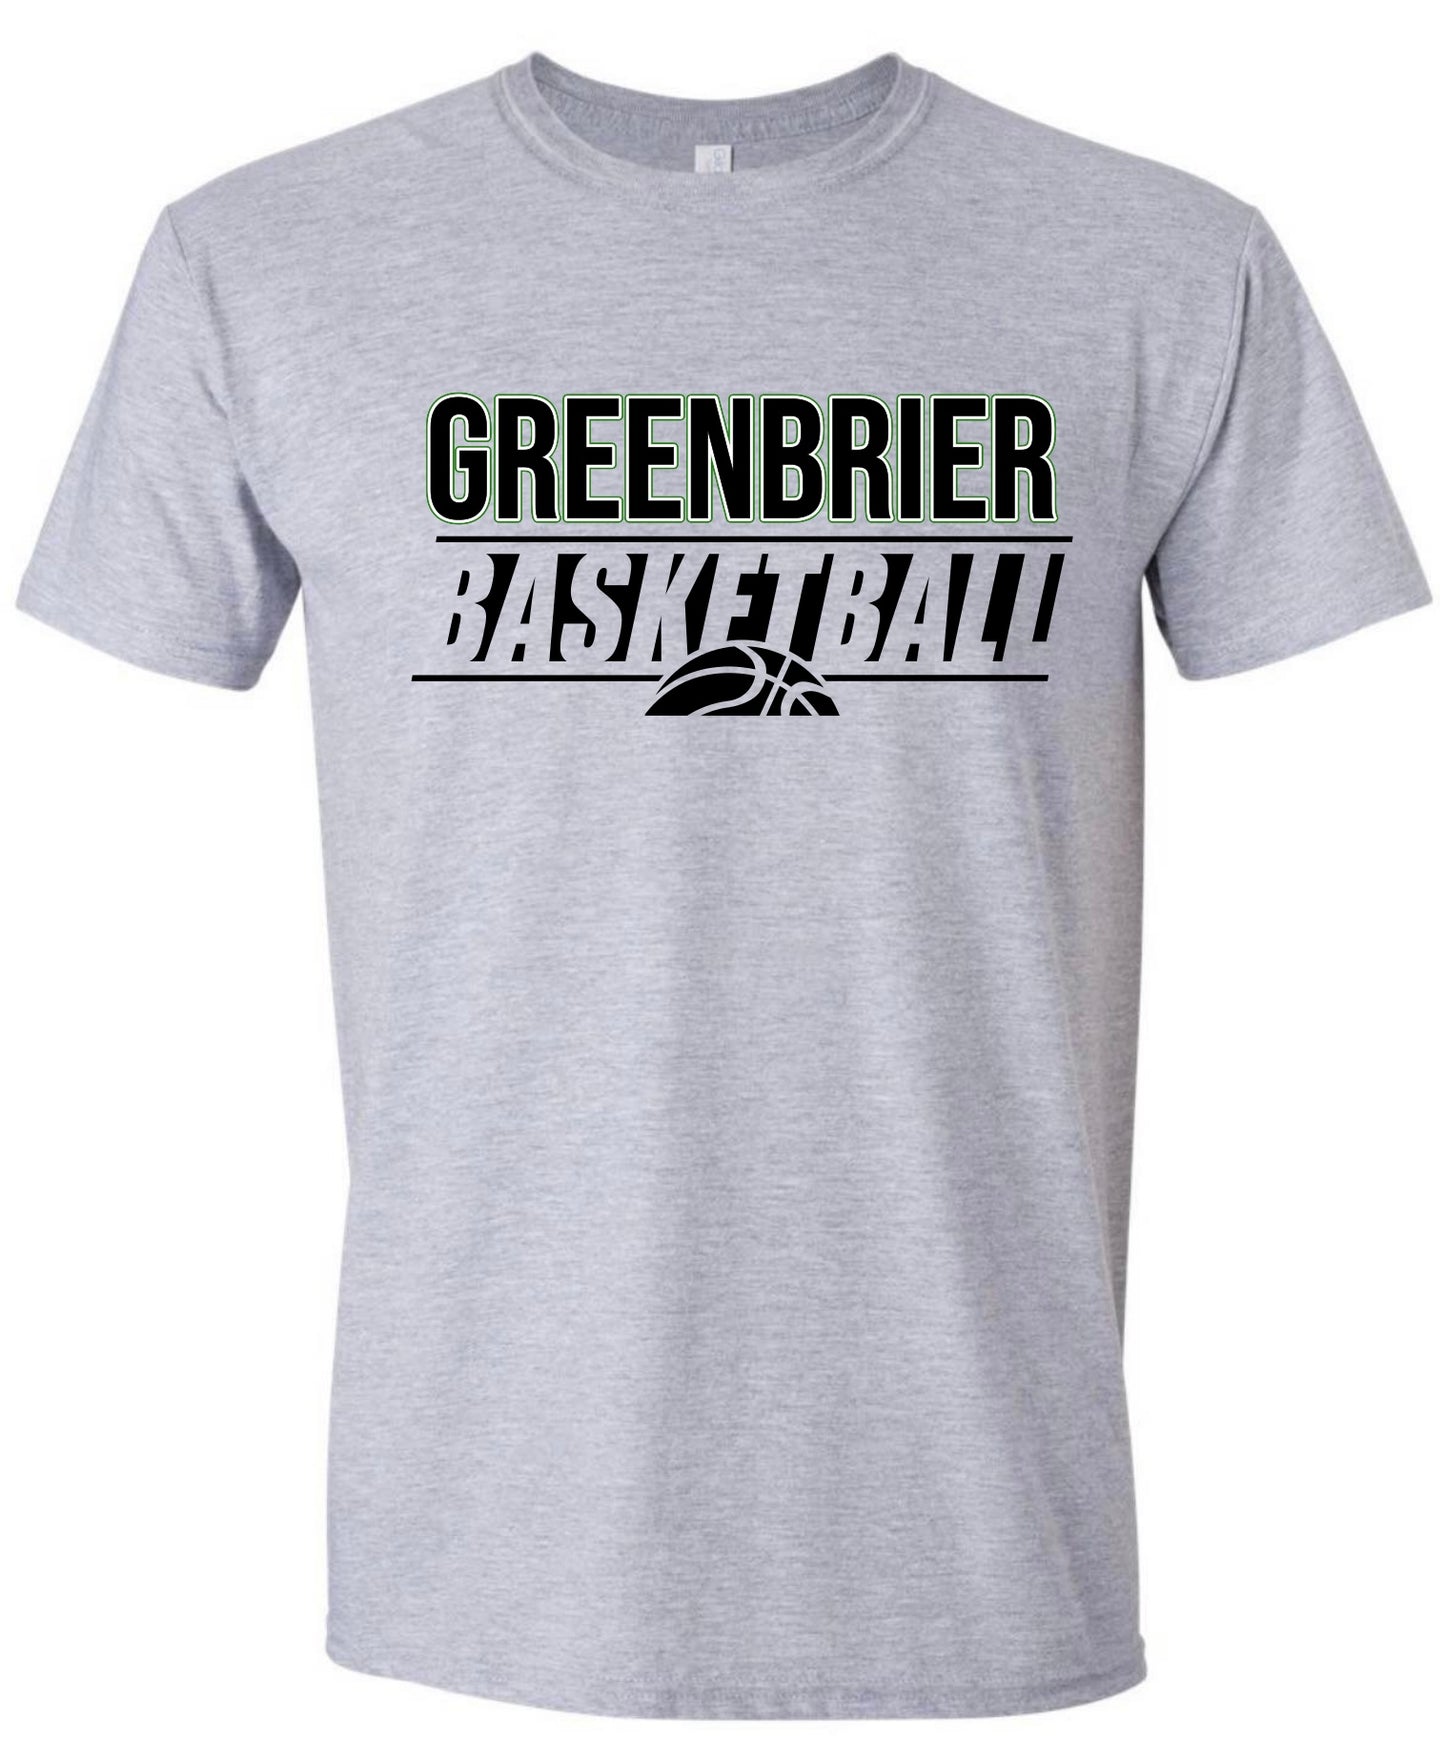 Greenbrier Half Basketball Tshirt